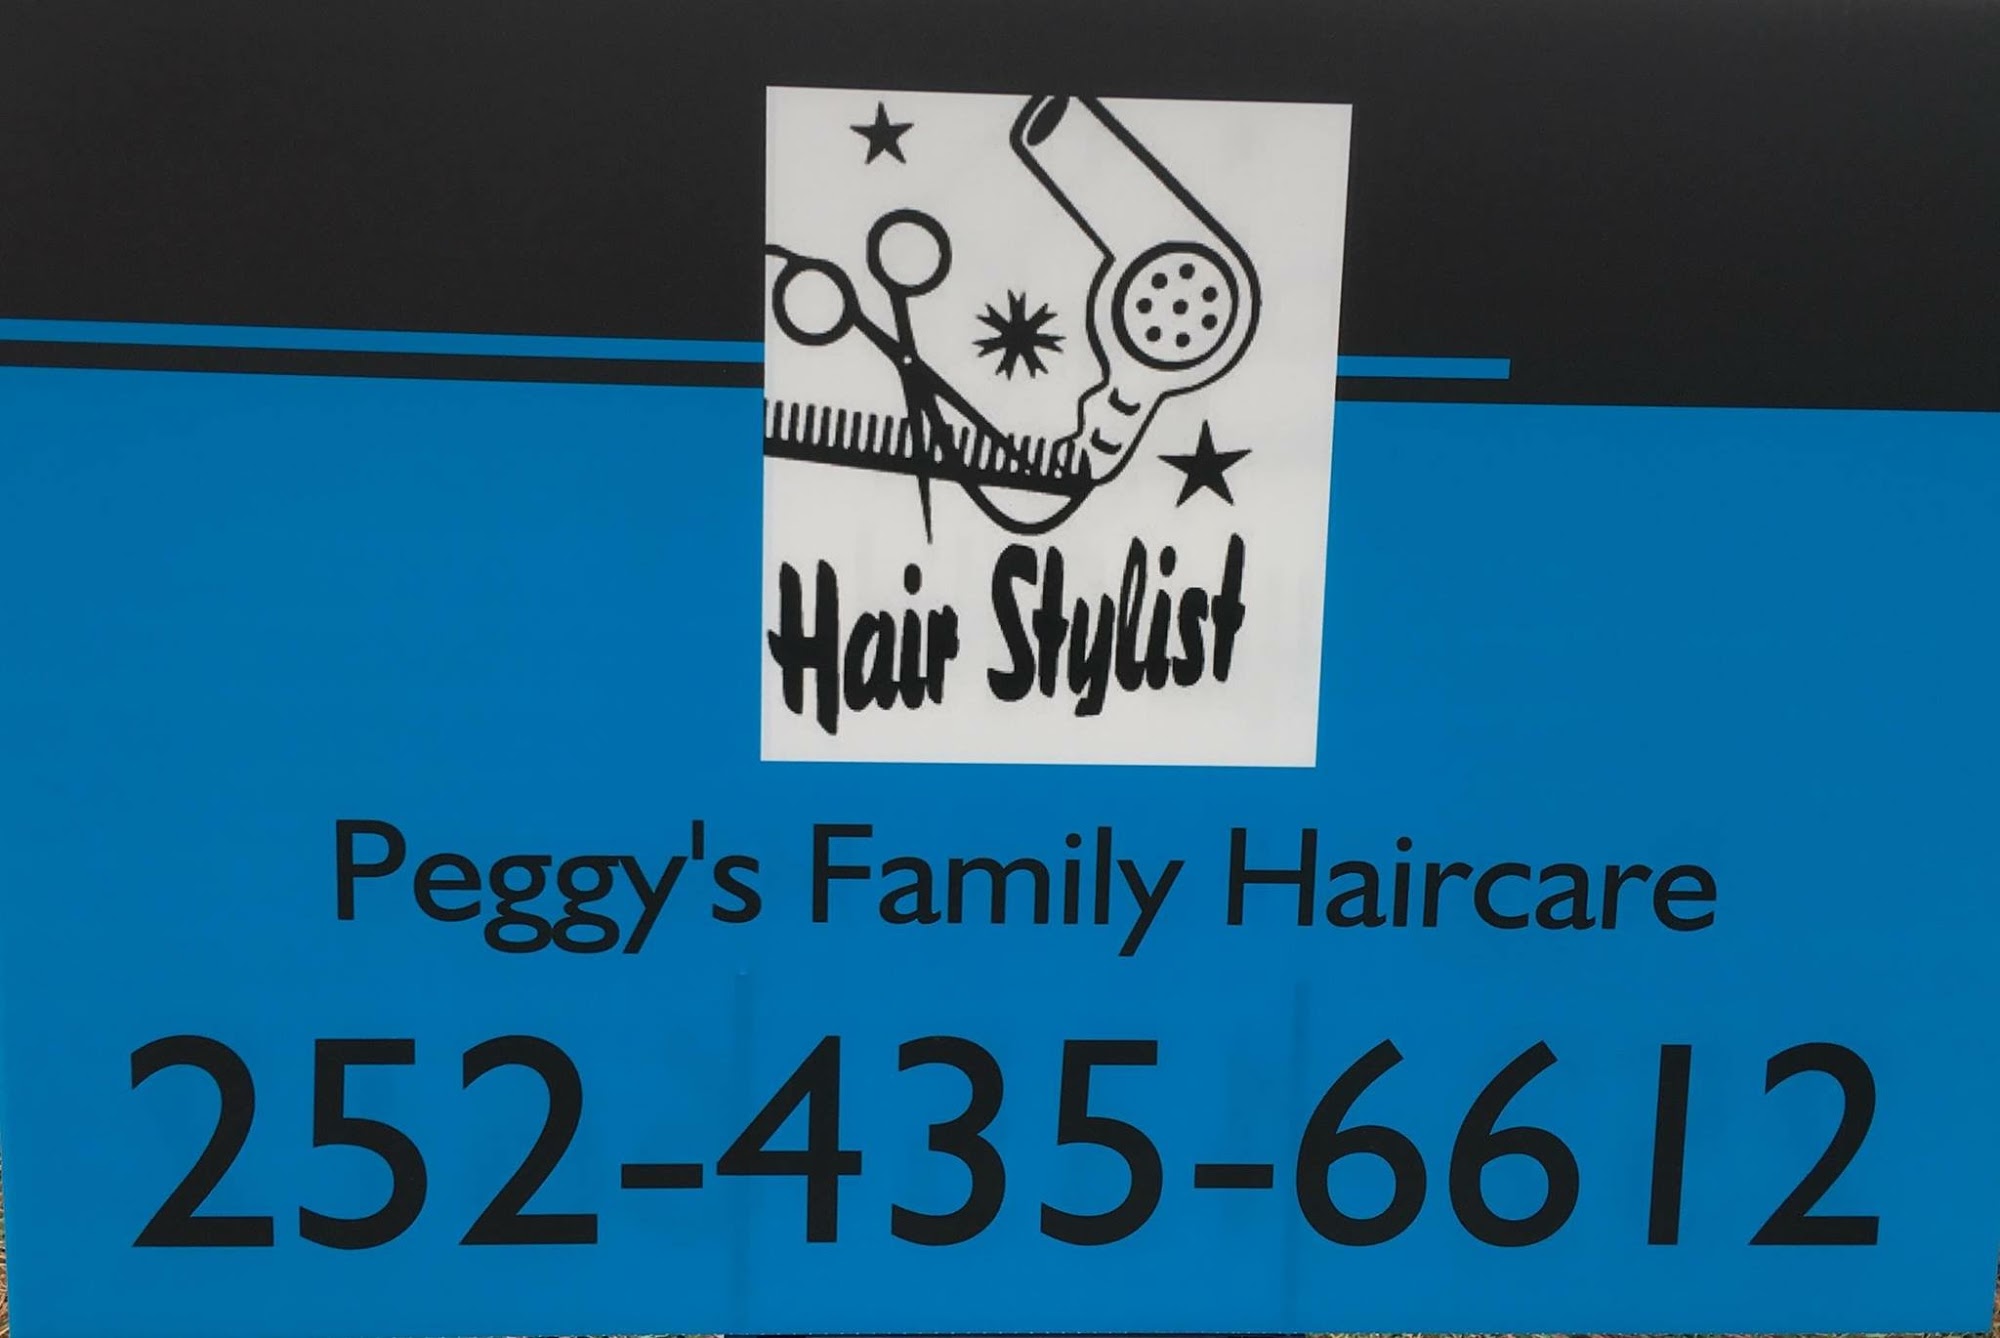 Peggy's Family Haircare